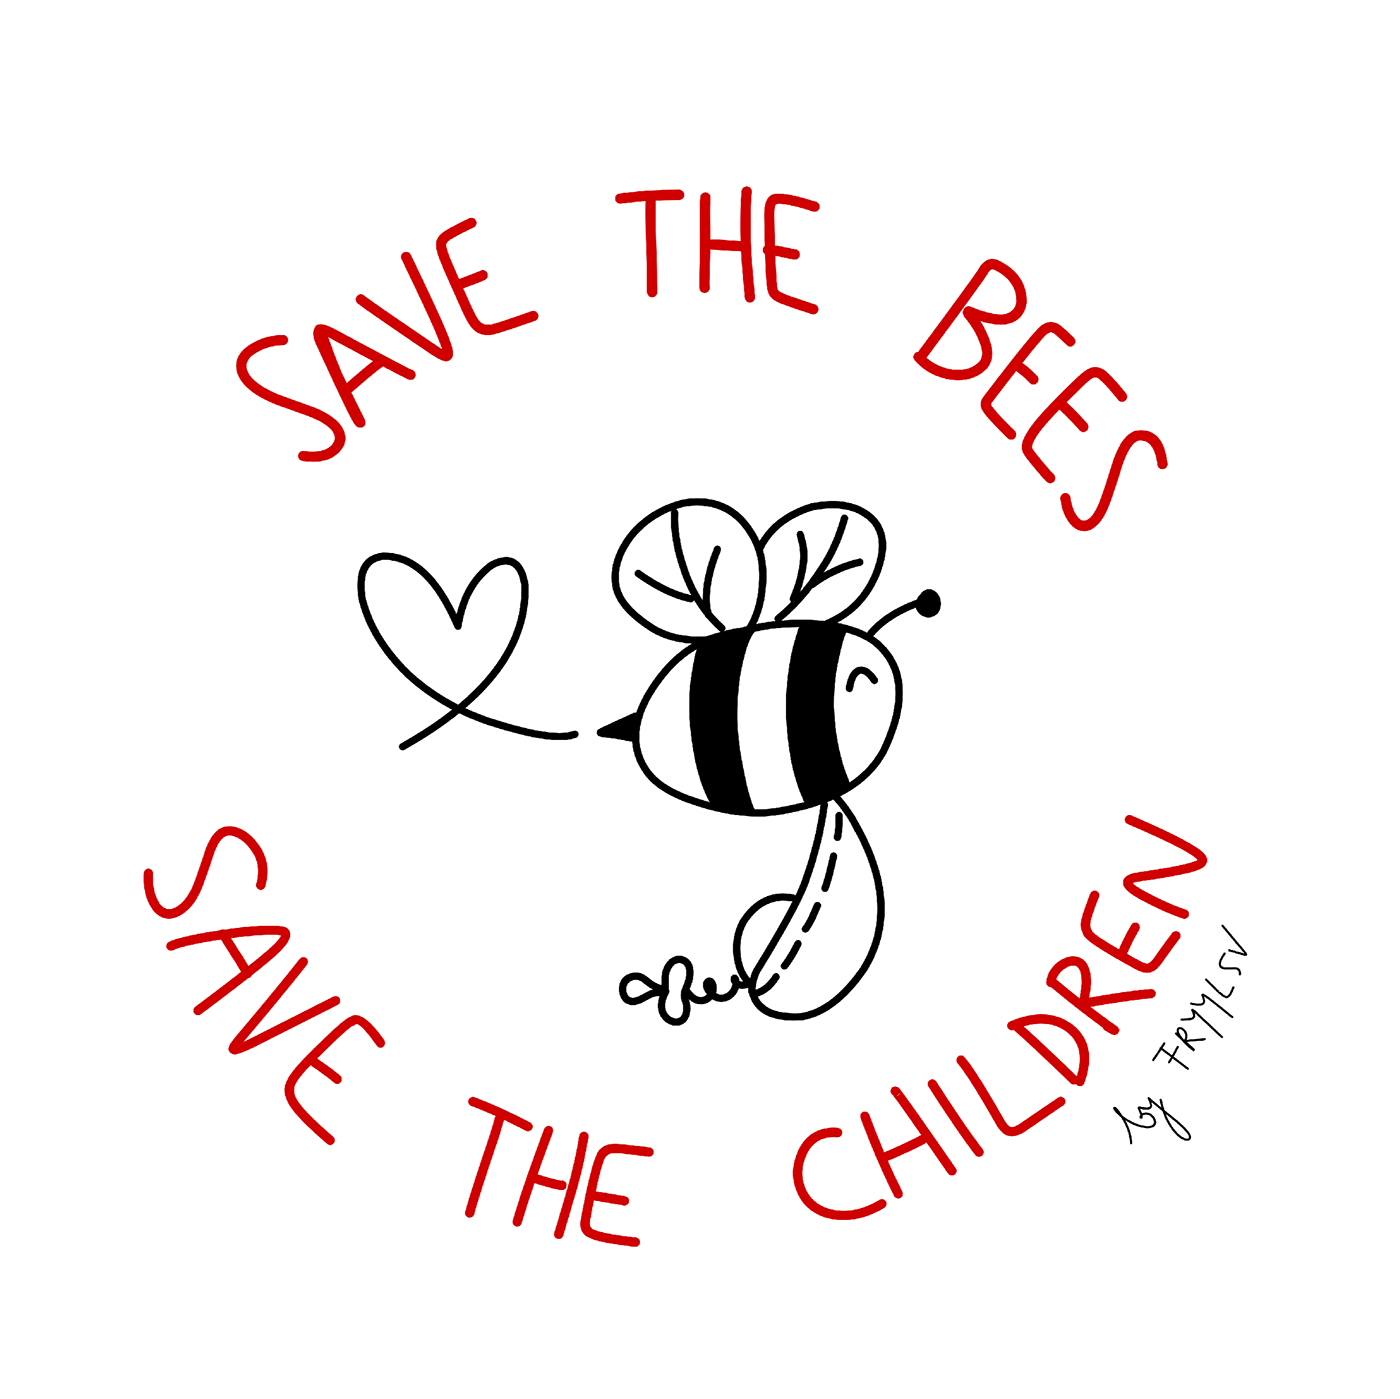 Abeja abejas bee bees child children earth future futuro Nature niño niños SaveTheBees savethechildren